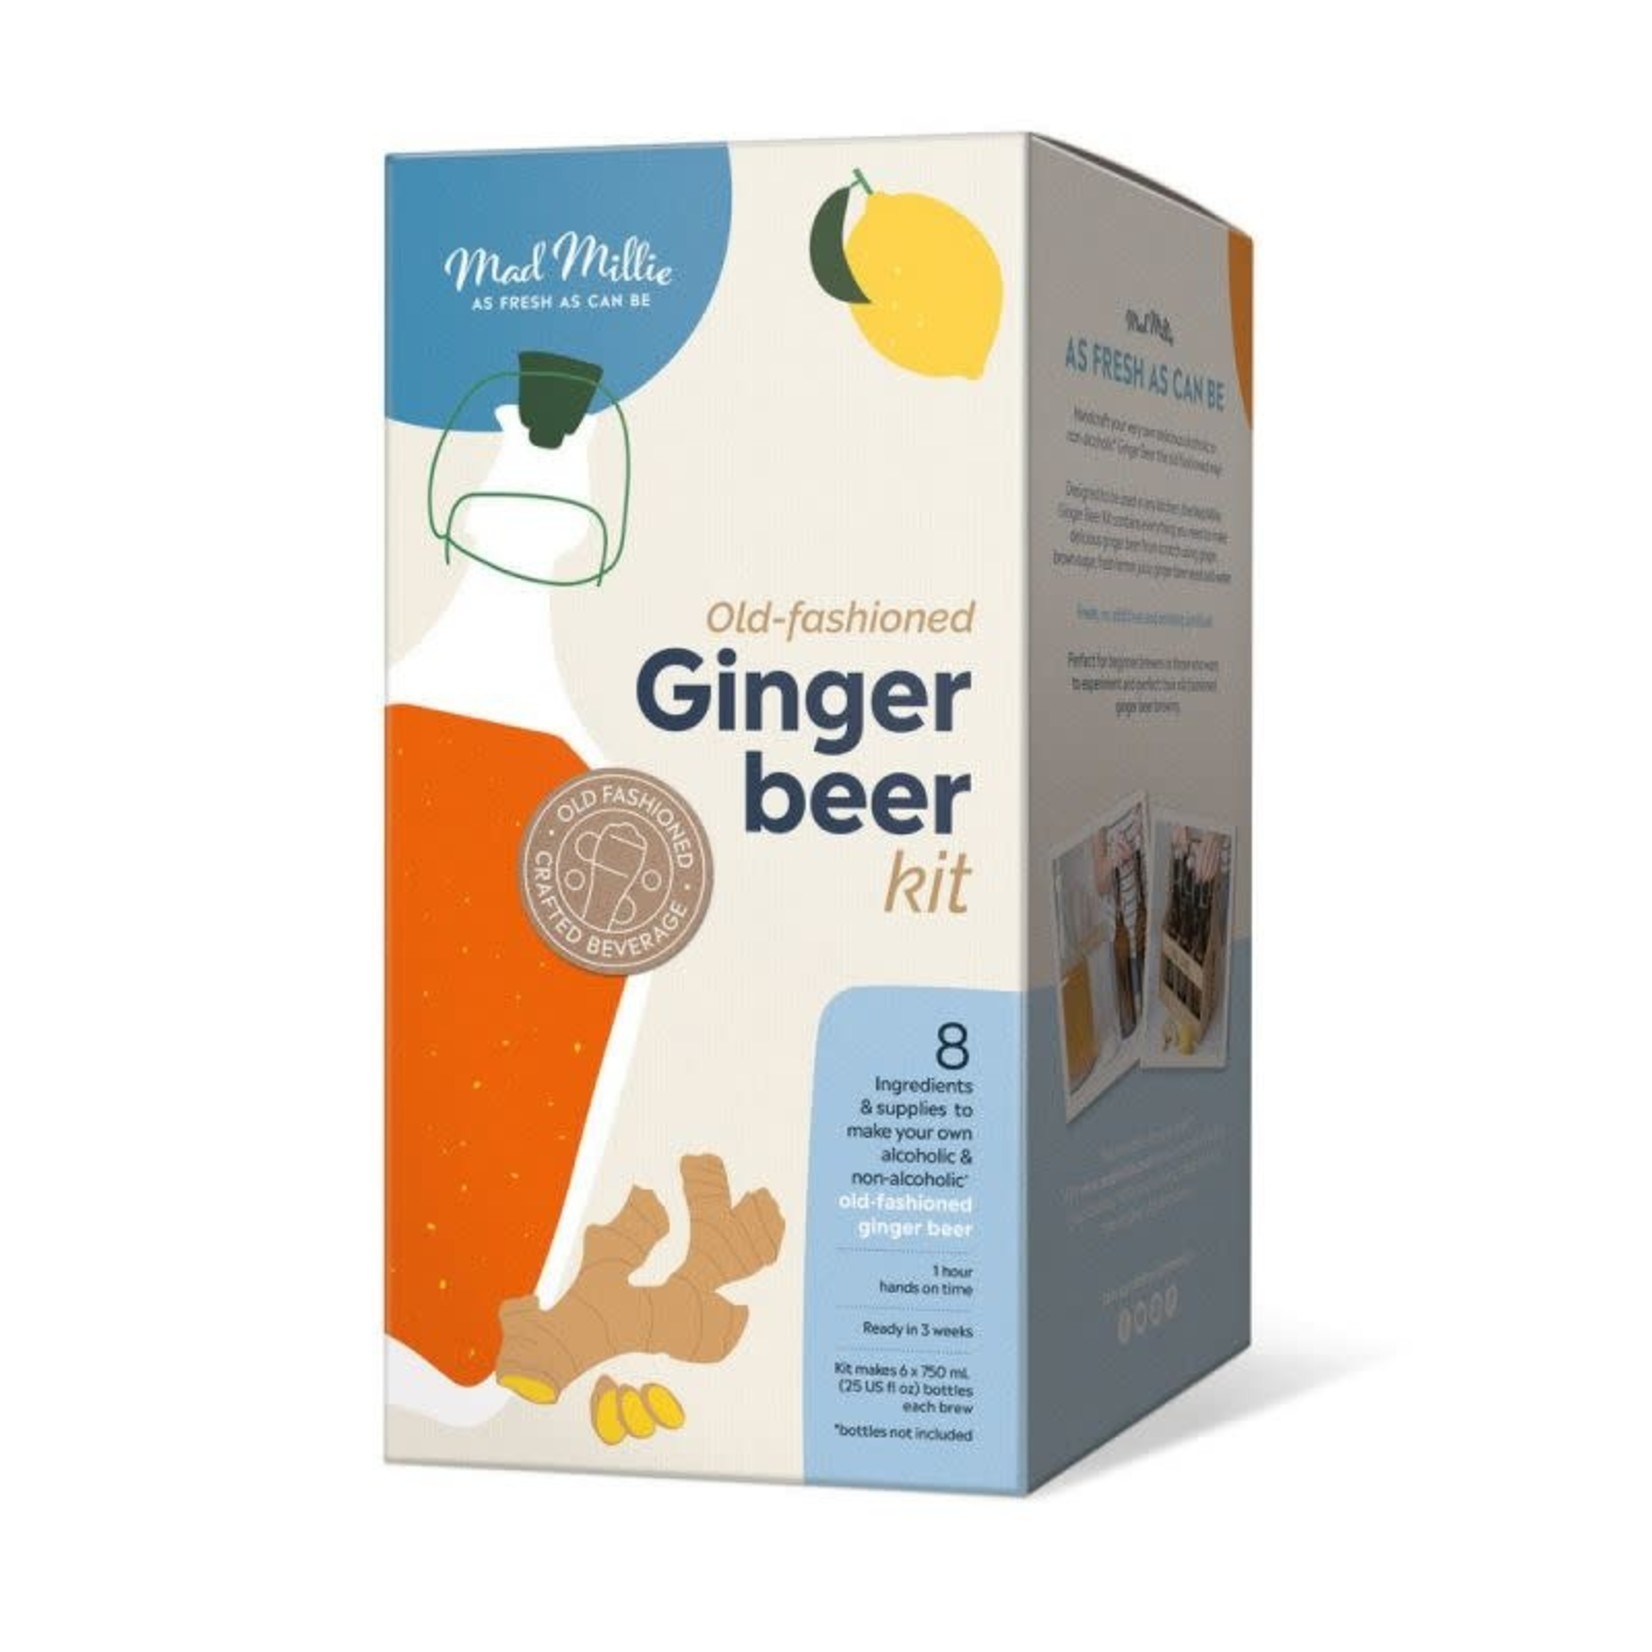 Mad Millie Mad Millie - Old-fashioned Ginger Beer Kit